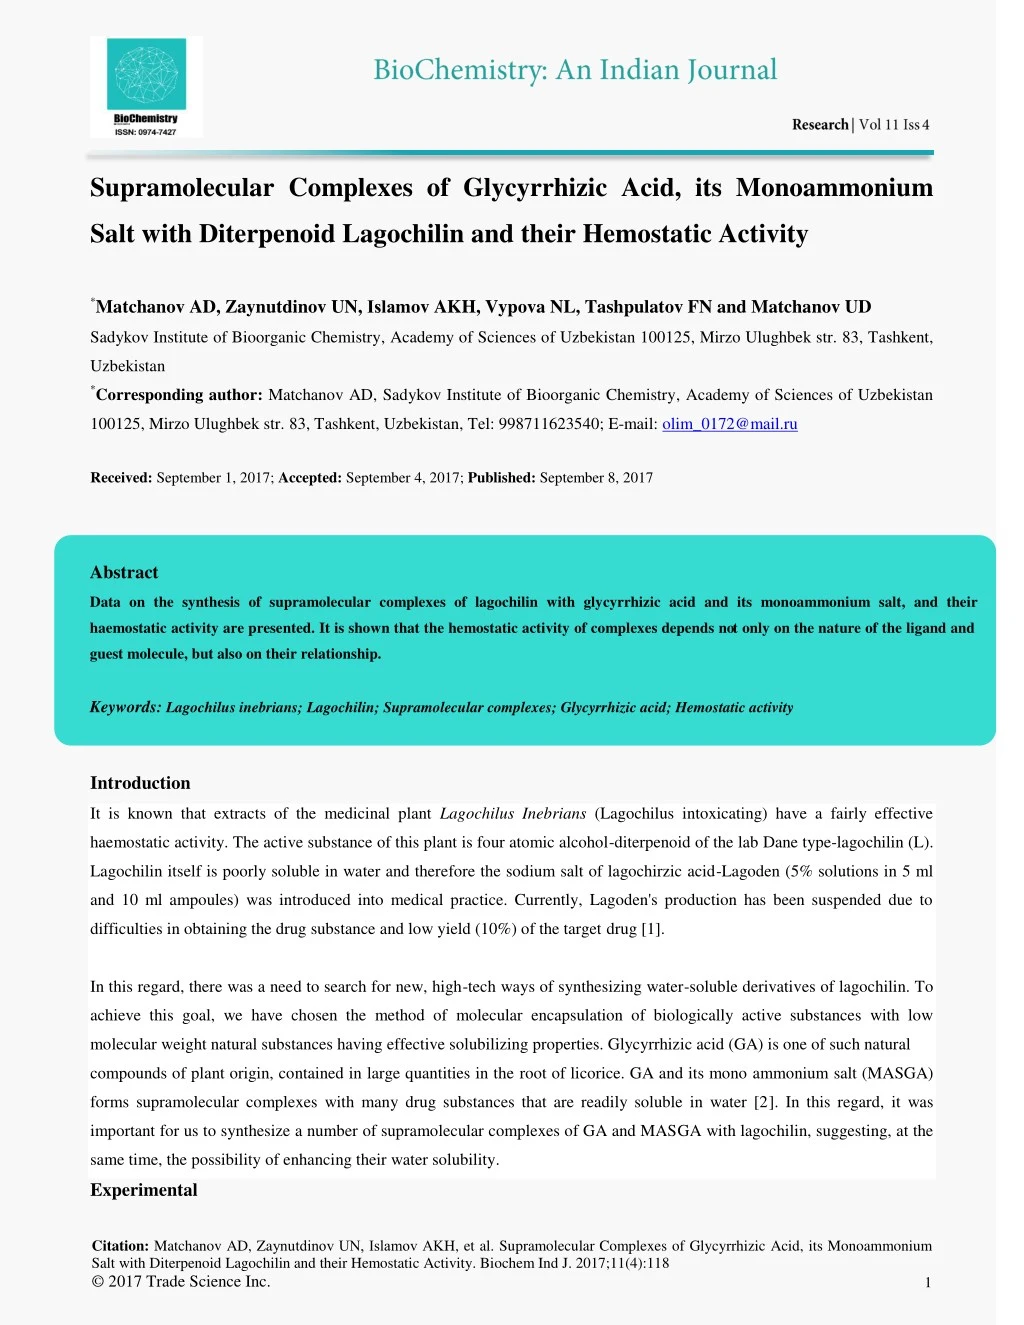 supramolecular complexes of glycyrrhizic acid